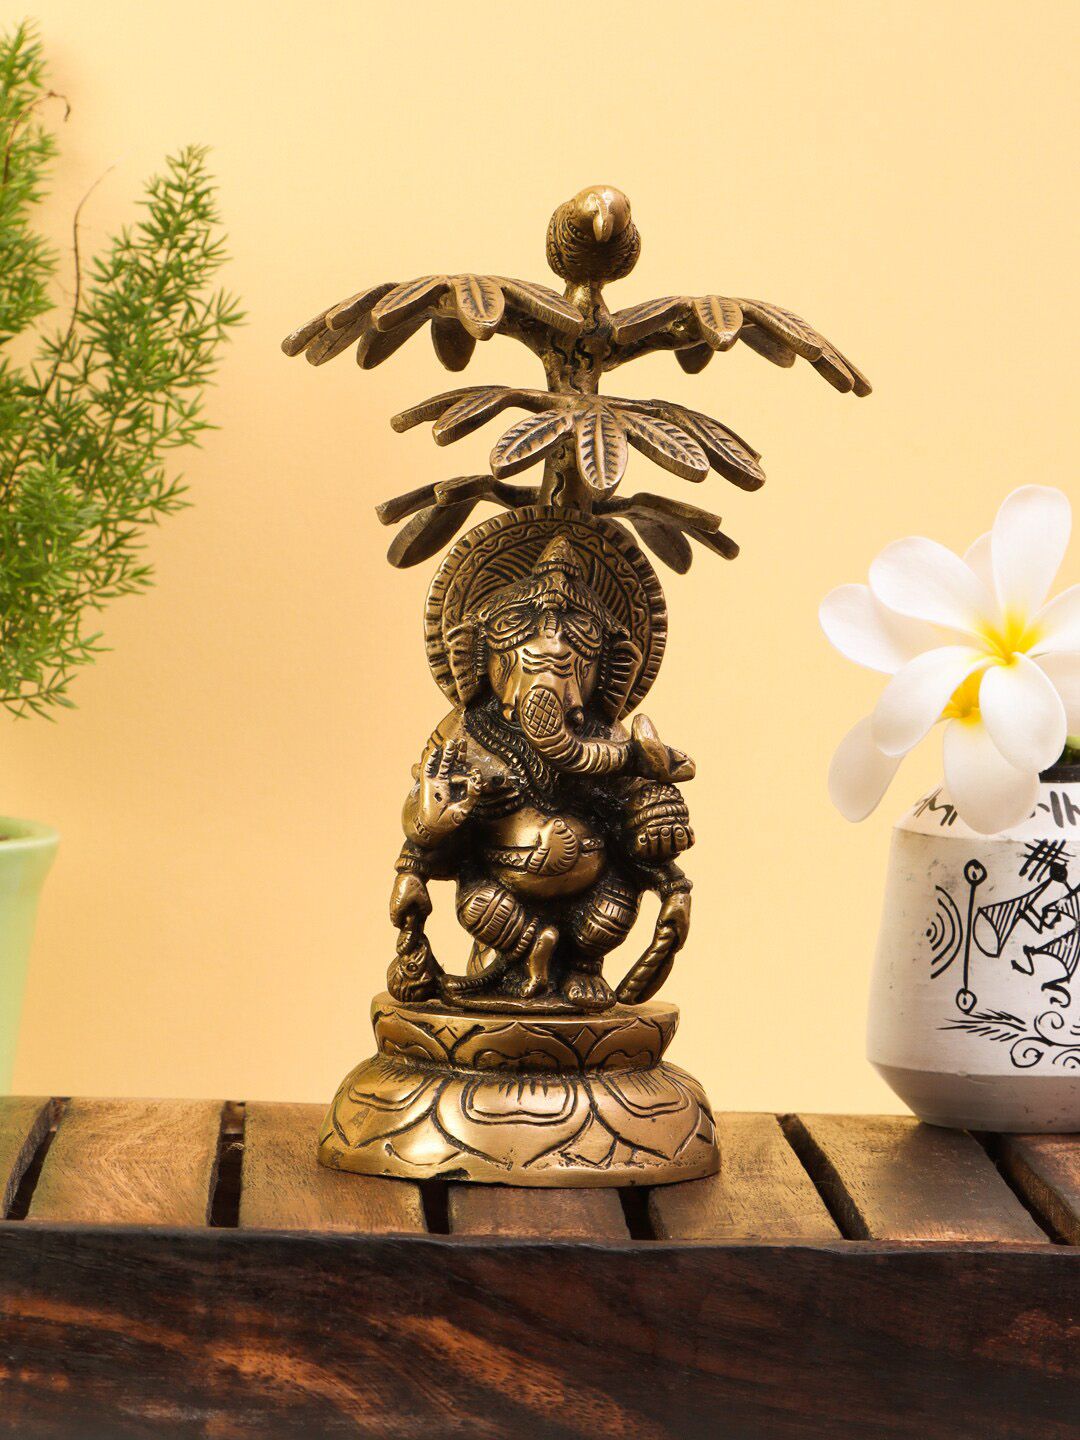 Imli Street Gold-Toned Brass Tree Ganesha Idol Price in India